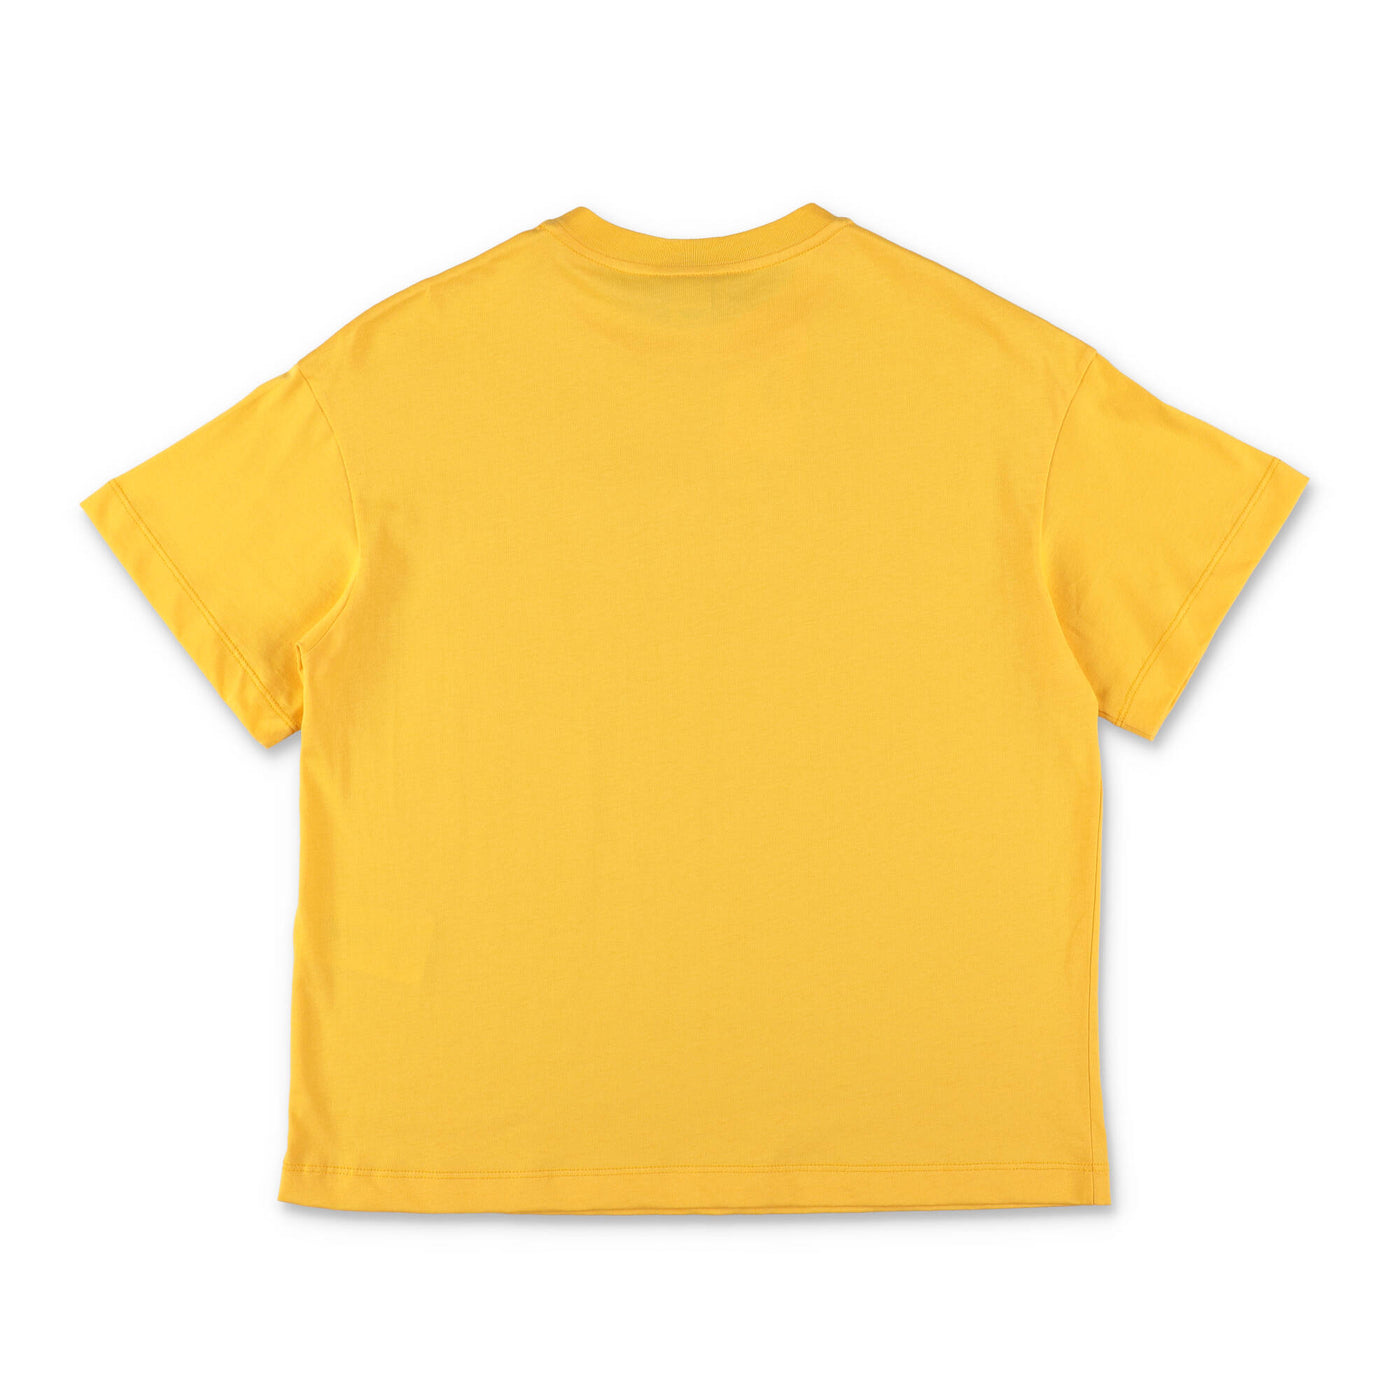 Yellow cotton jersey boy FENDI t-shirt - Carofiglio Junior